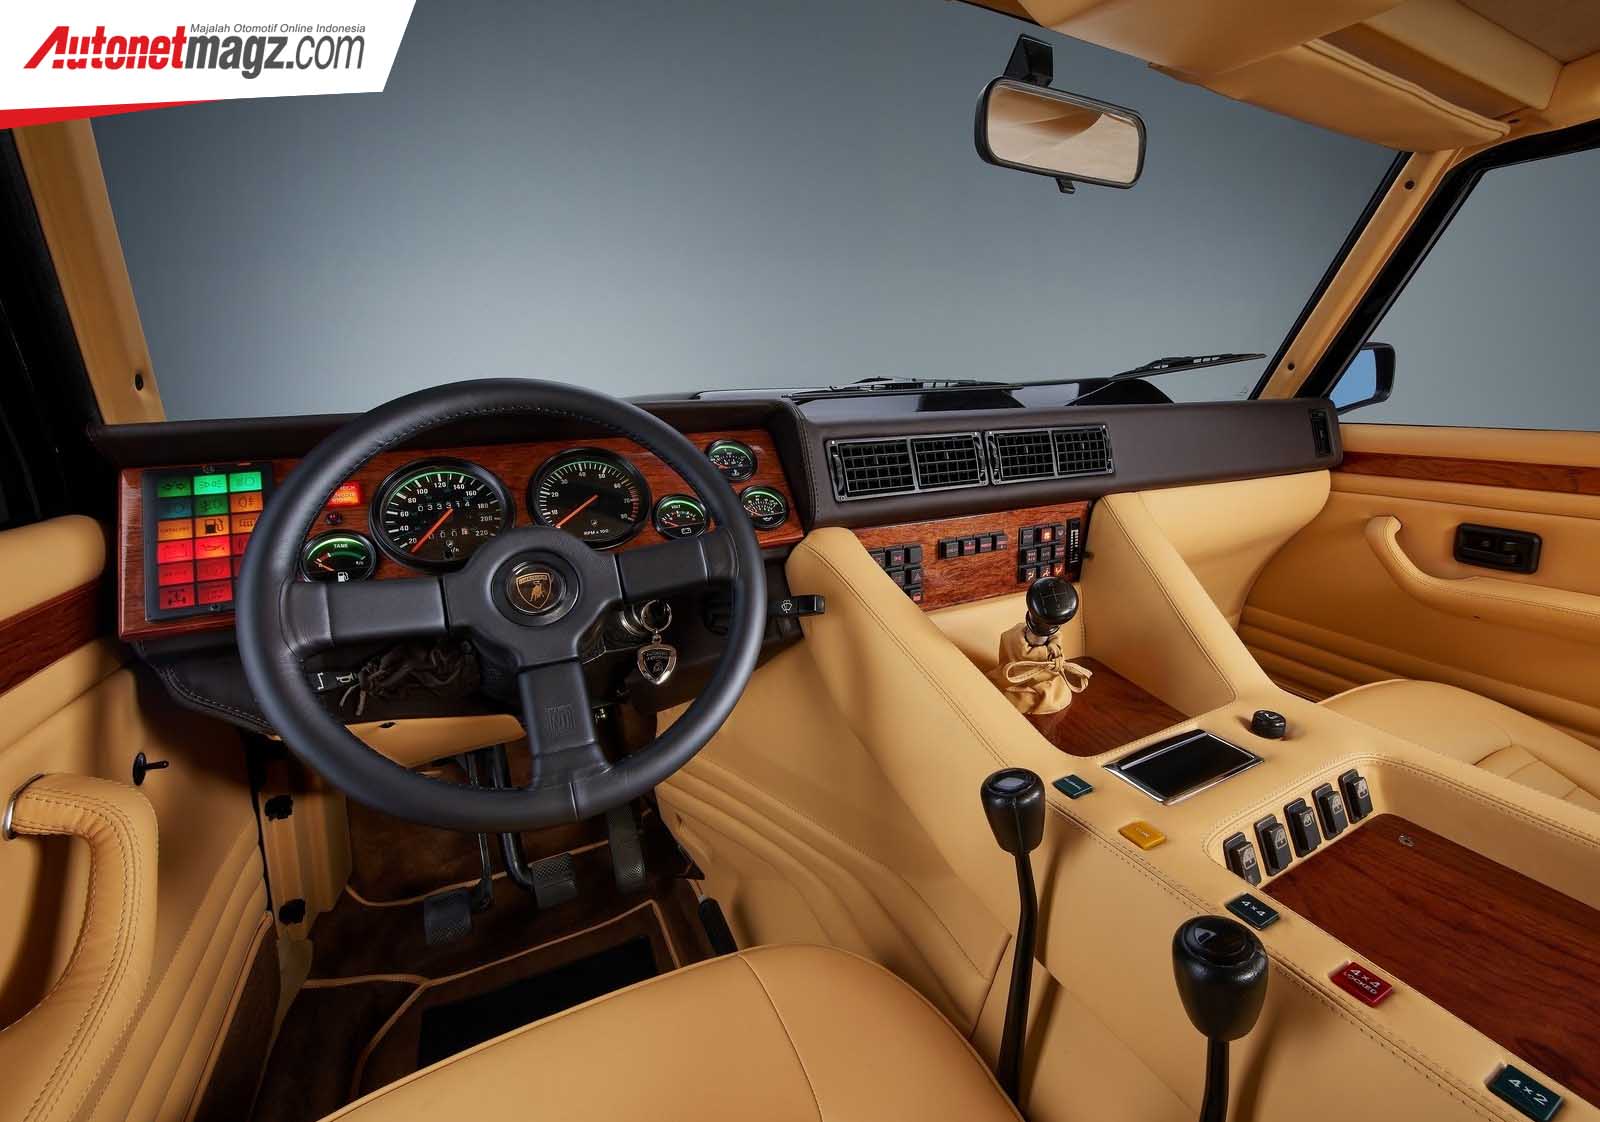 Interior Lamborghini LM002 - AutonetMagz :: Review Mobil ...